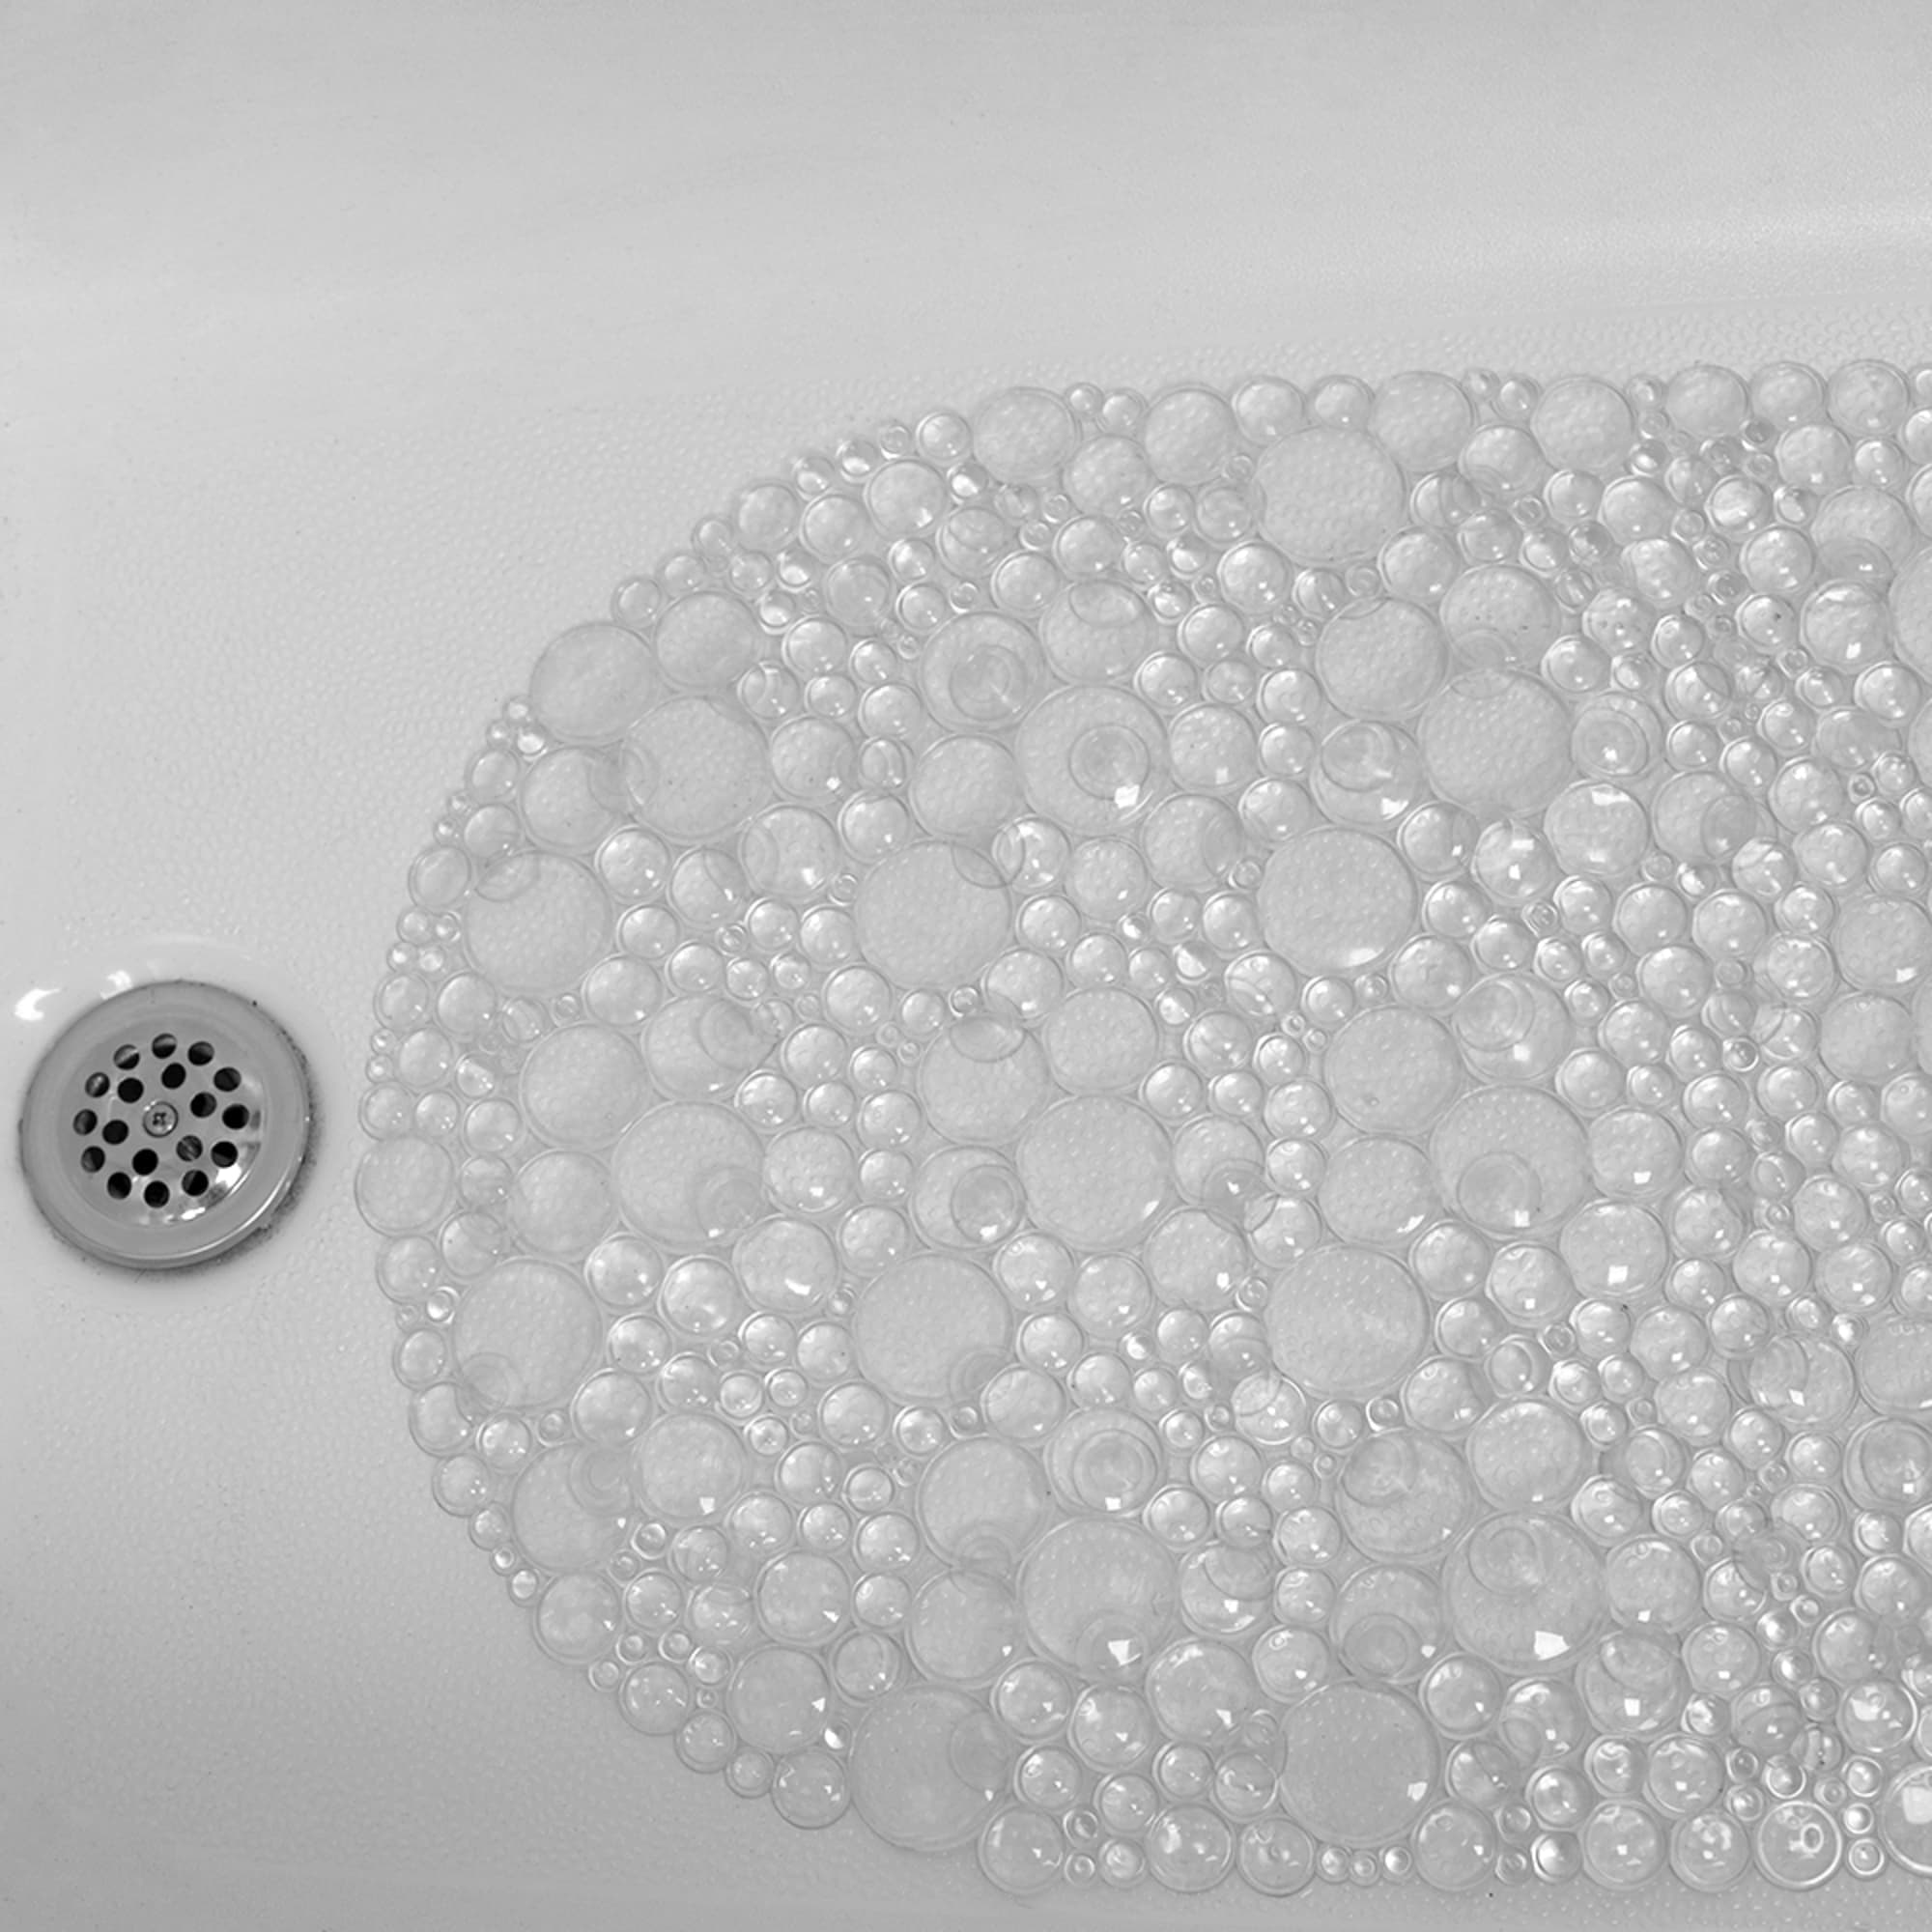 Home Basics Double Bubble Bath Mat, Clear $4.00 EACH, CASE PACK OF 12